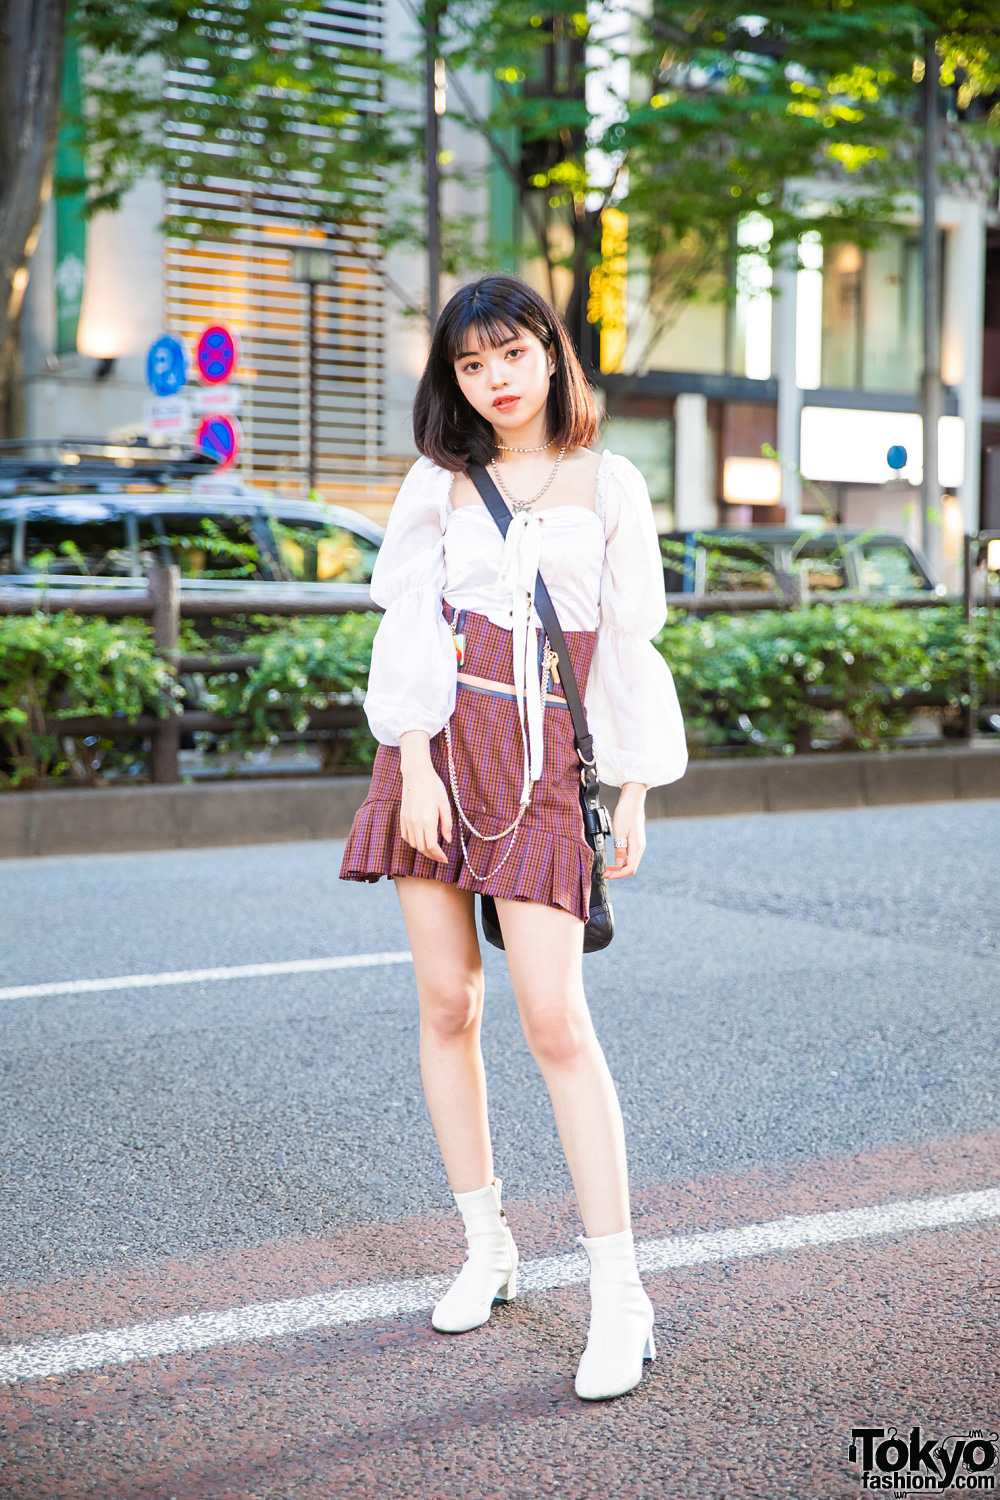 Tokyo Girl Plaid Fashion w/ Ruffled Long Sleeves, Nodress Plaid Skirt, Coach Crossbody Bag, White Boots & Unperfect Accessories